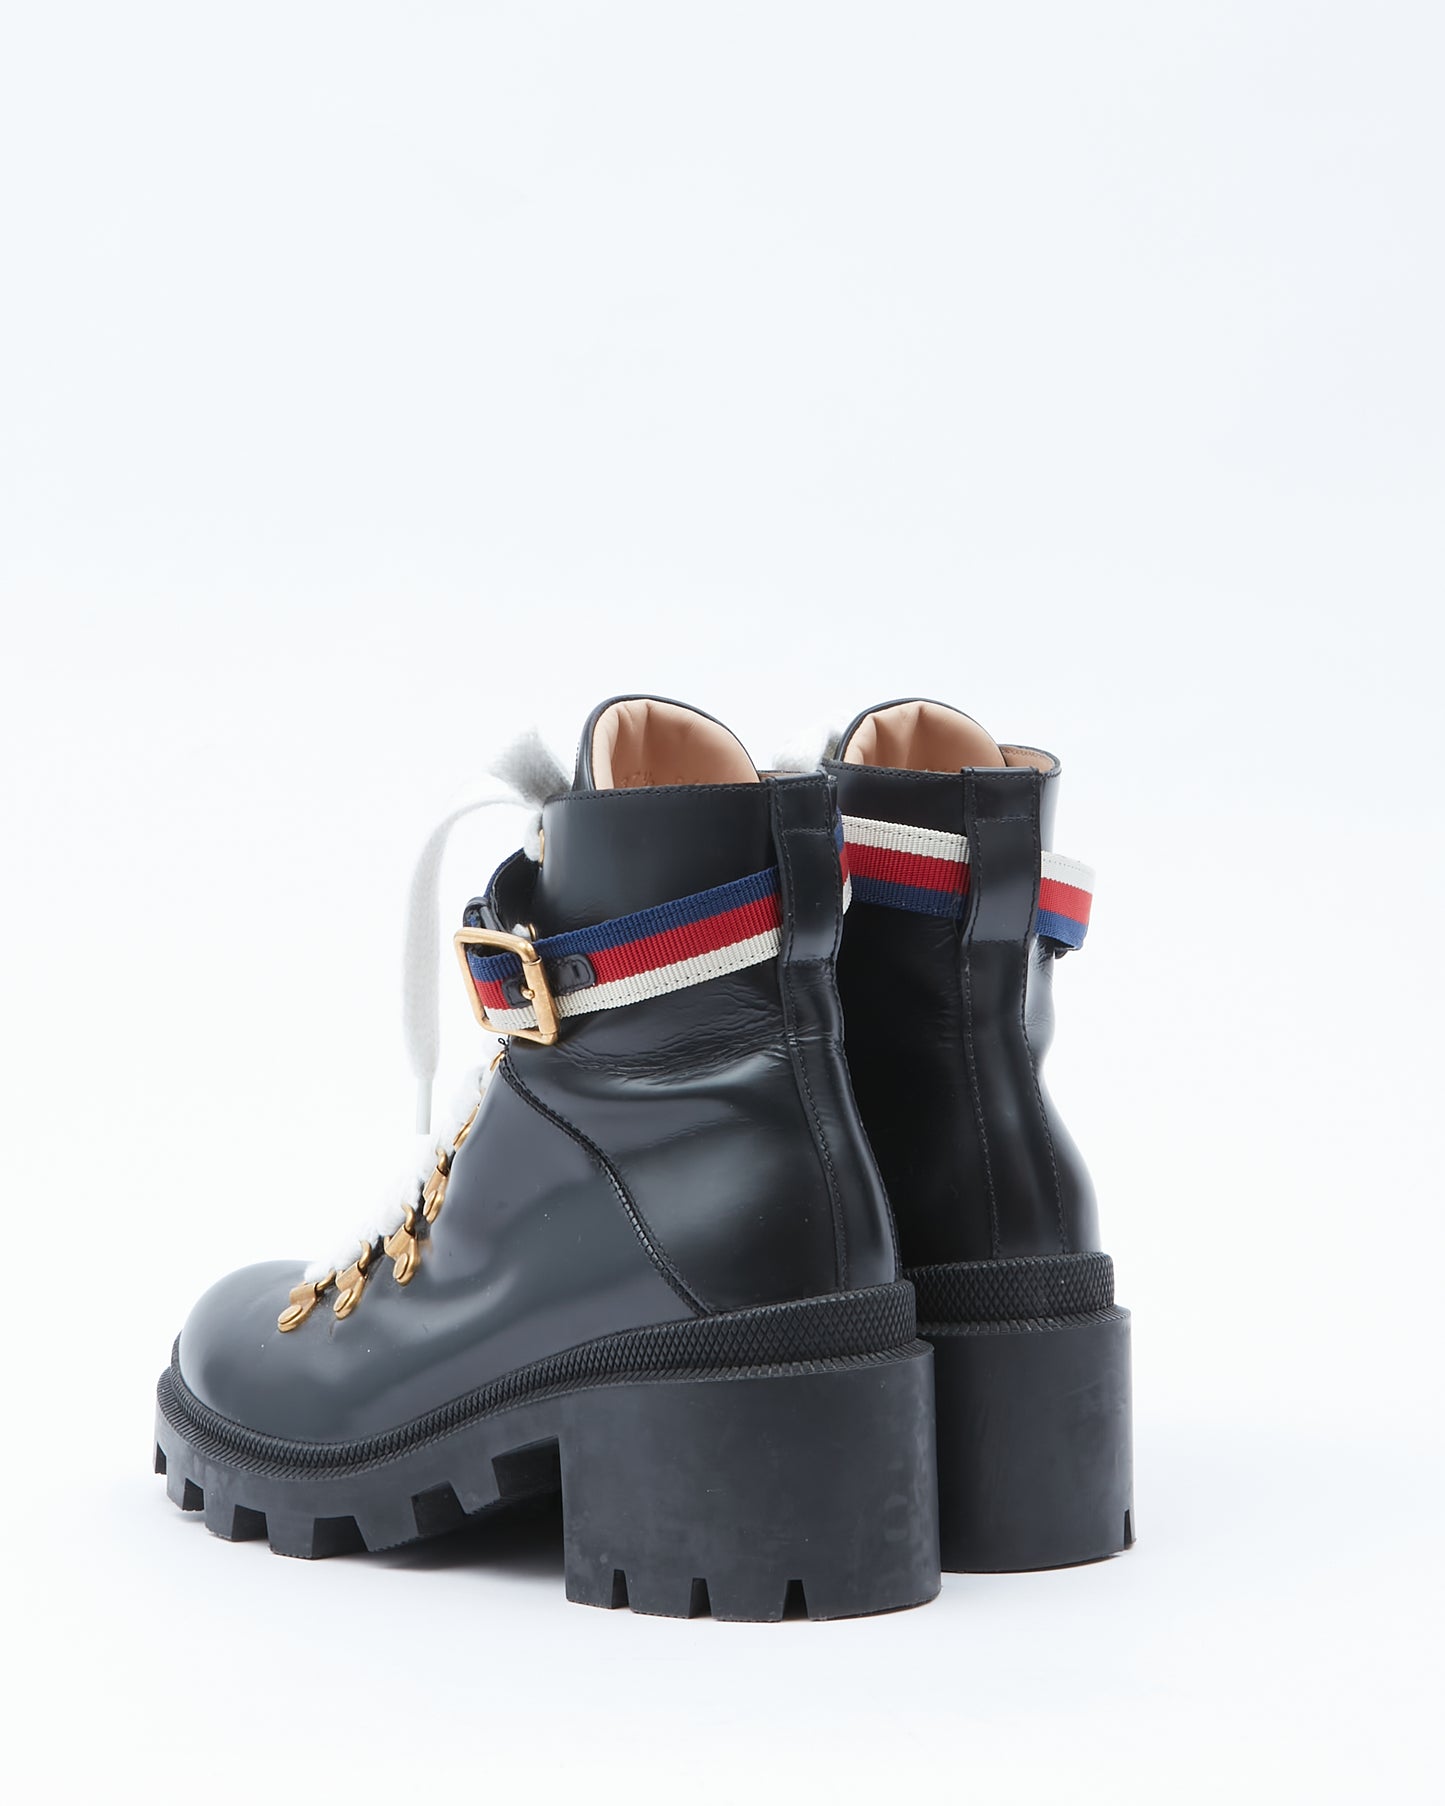 Gucci Black Leather Combat Web Boots - 37.5